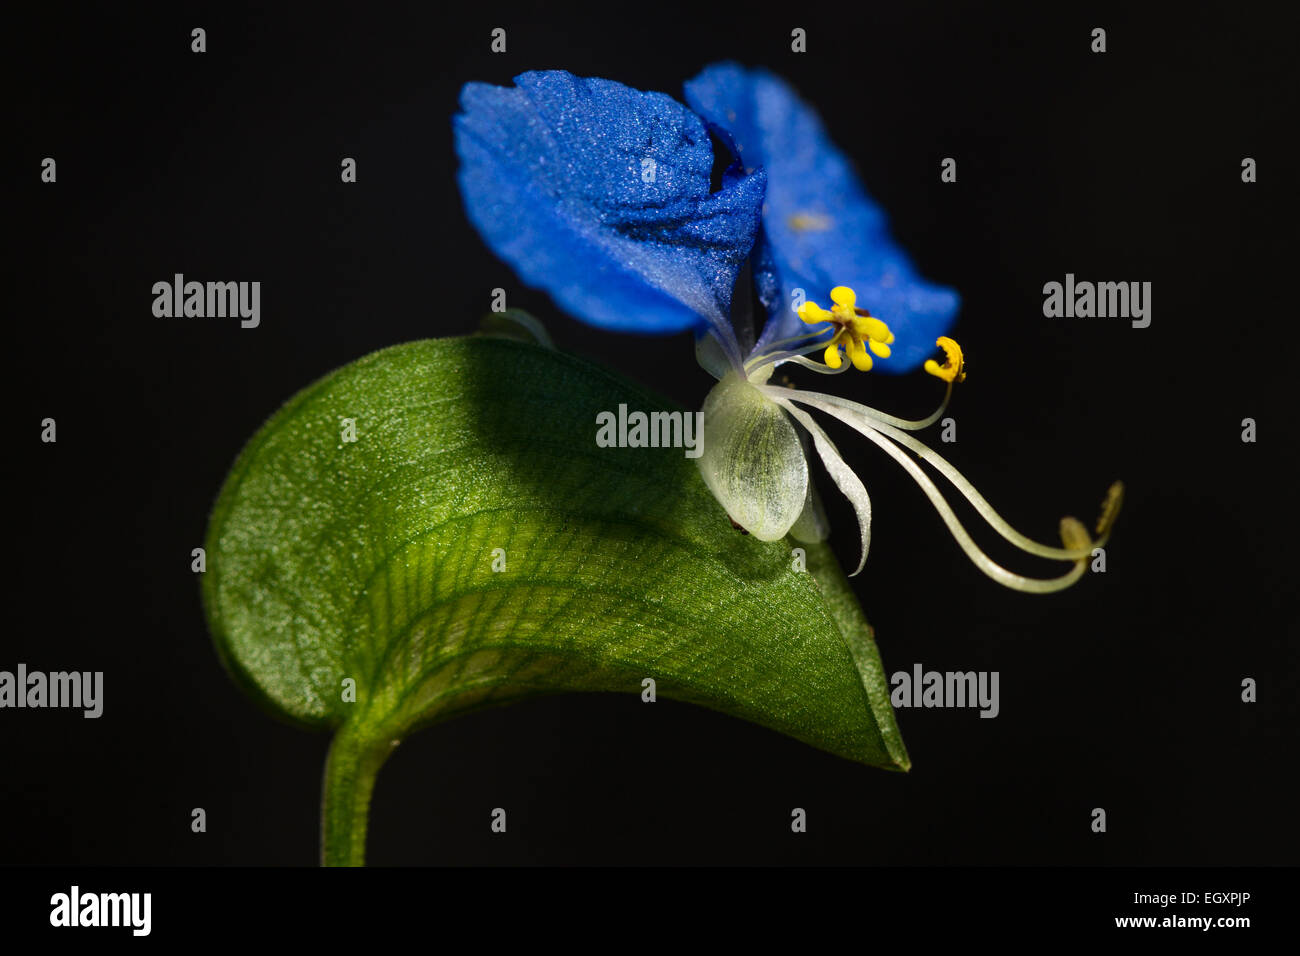 Asiatic Dayflower isolated on black background Stock Photo